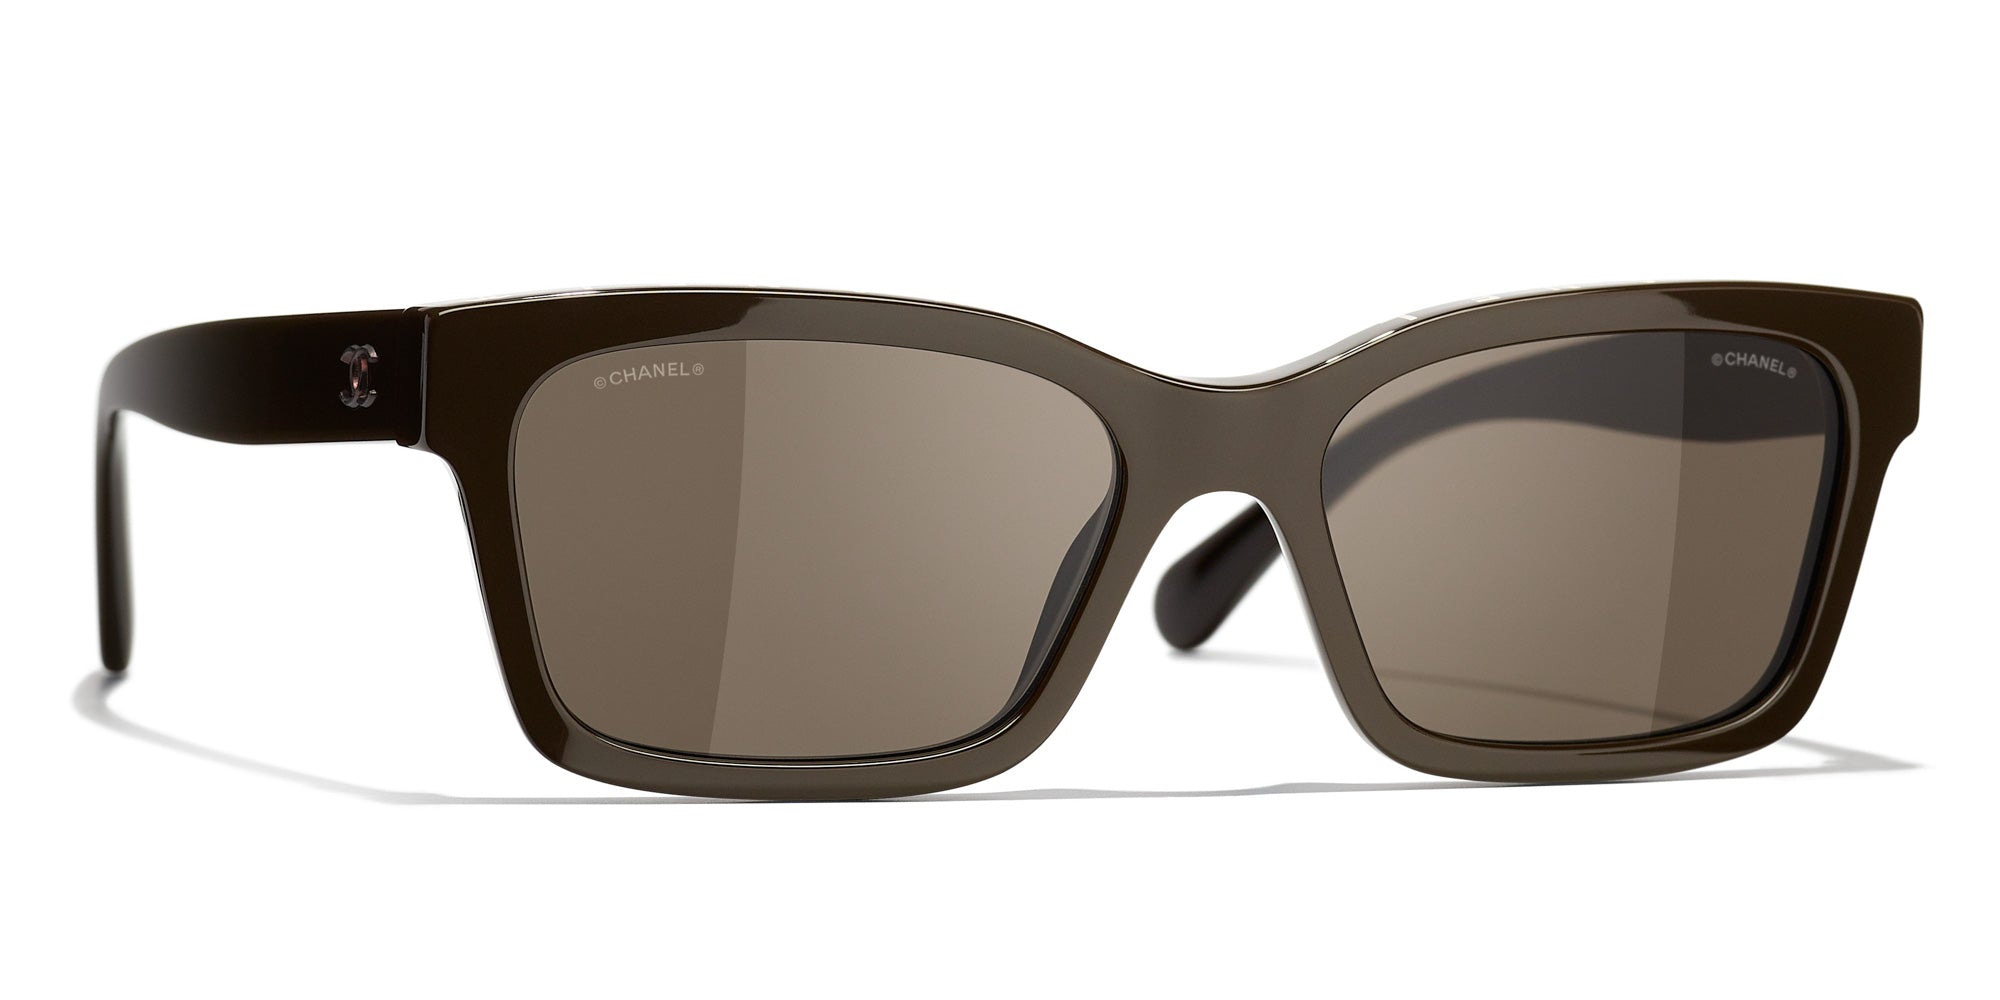 Shield Sunglasses - Sunglasses